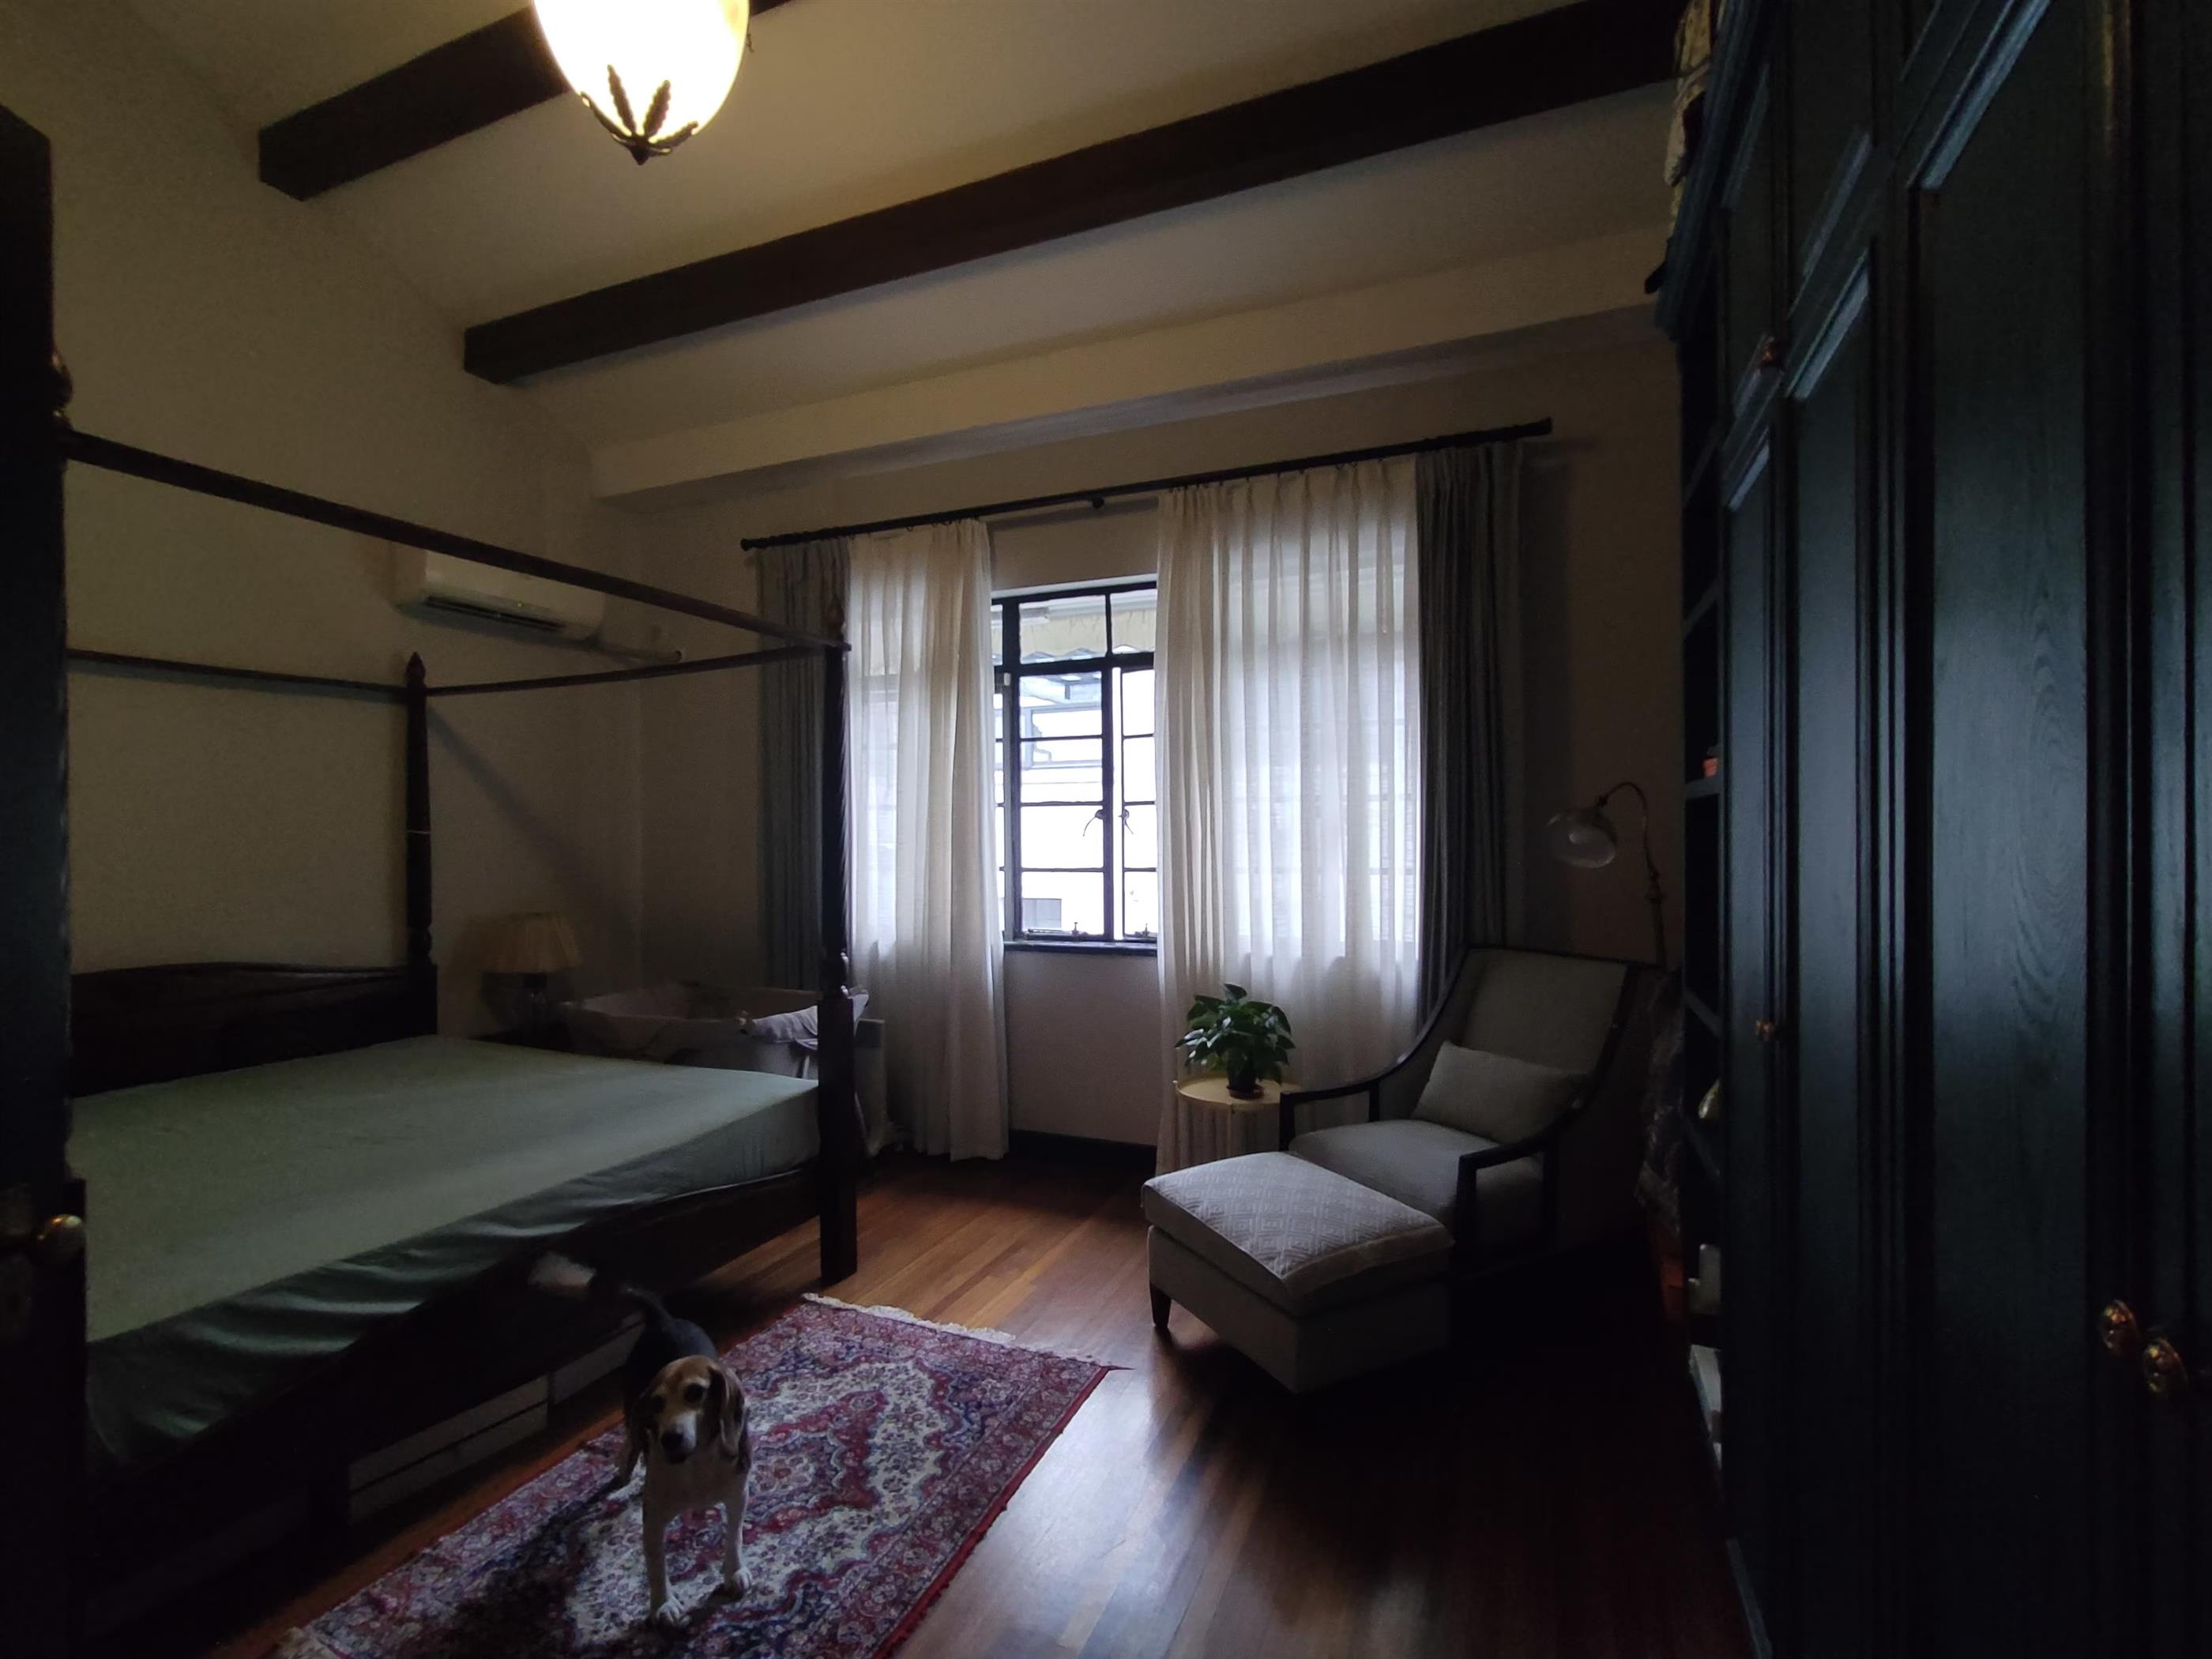 bedroom *** For Sale *** 3-Floor 5-Room Nanjing W Rd Lane House in Shanghai